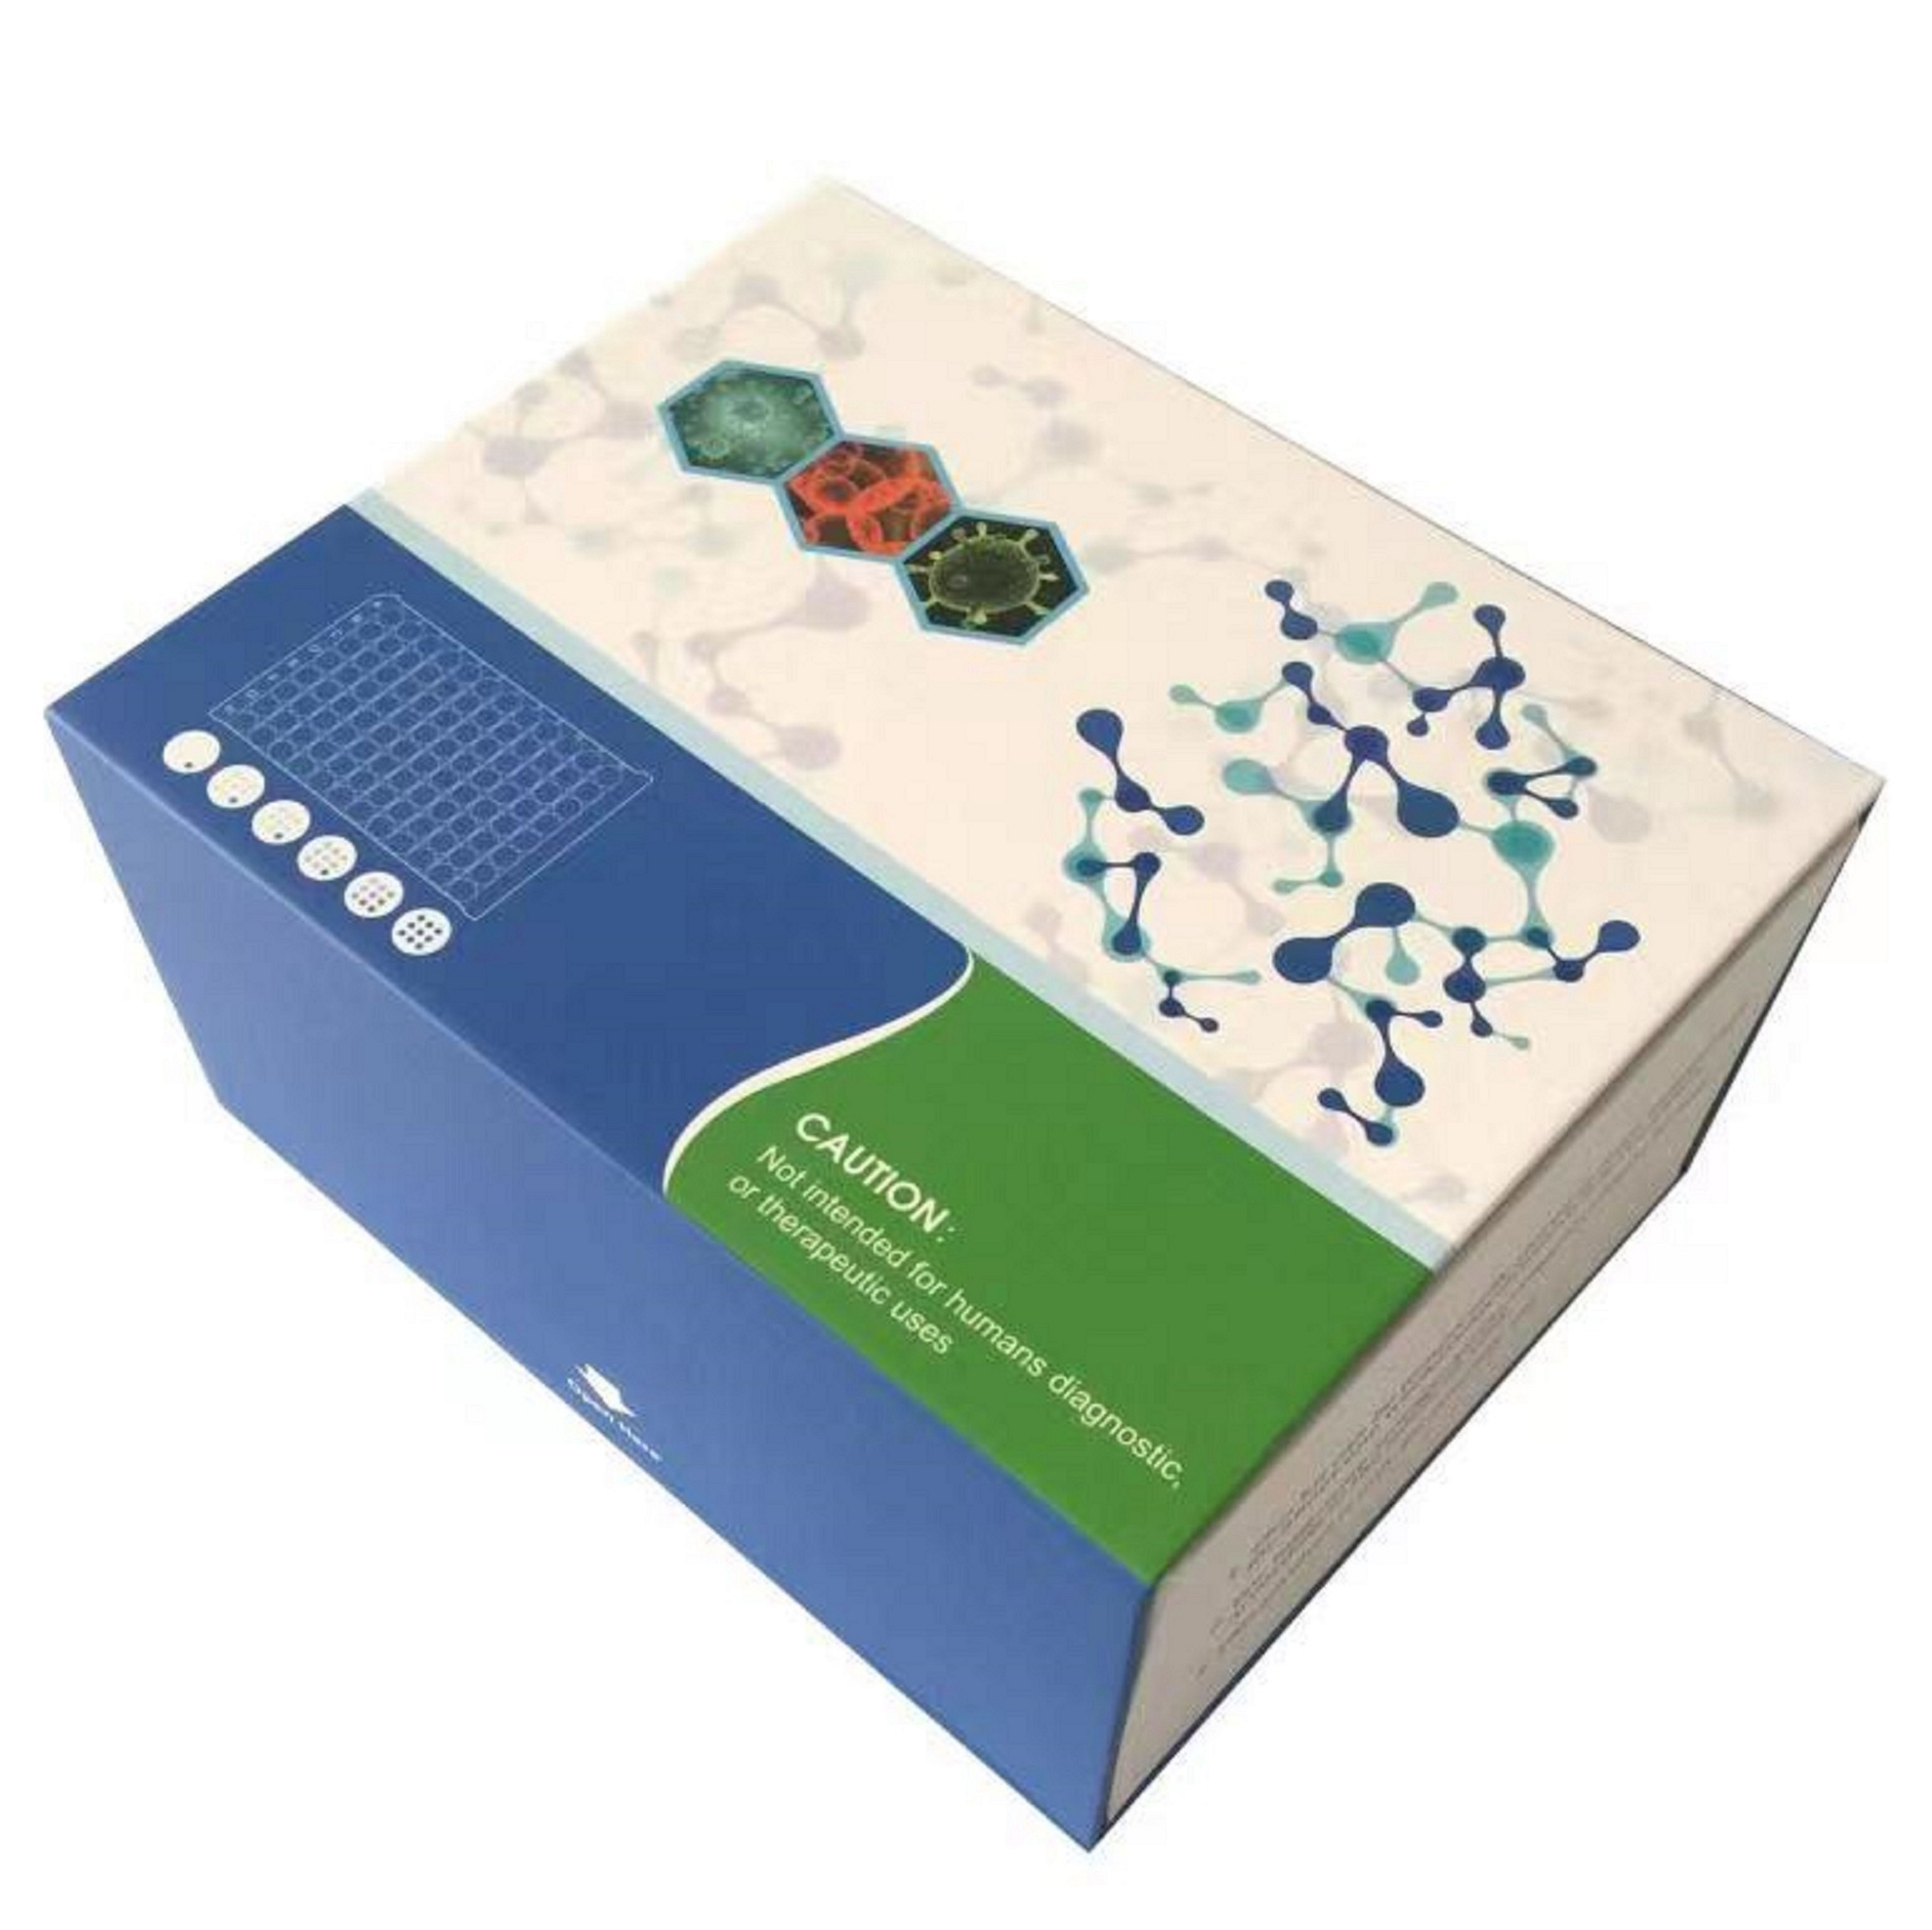 甲状旁腺素ELISA检测试剂盒 25-800pg